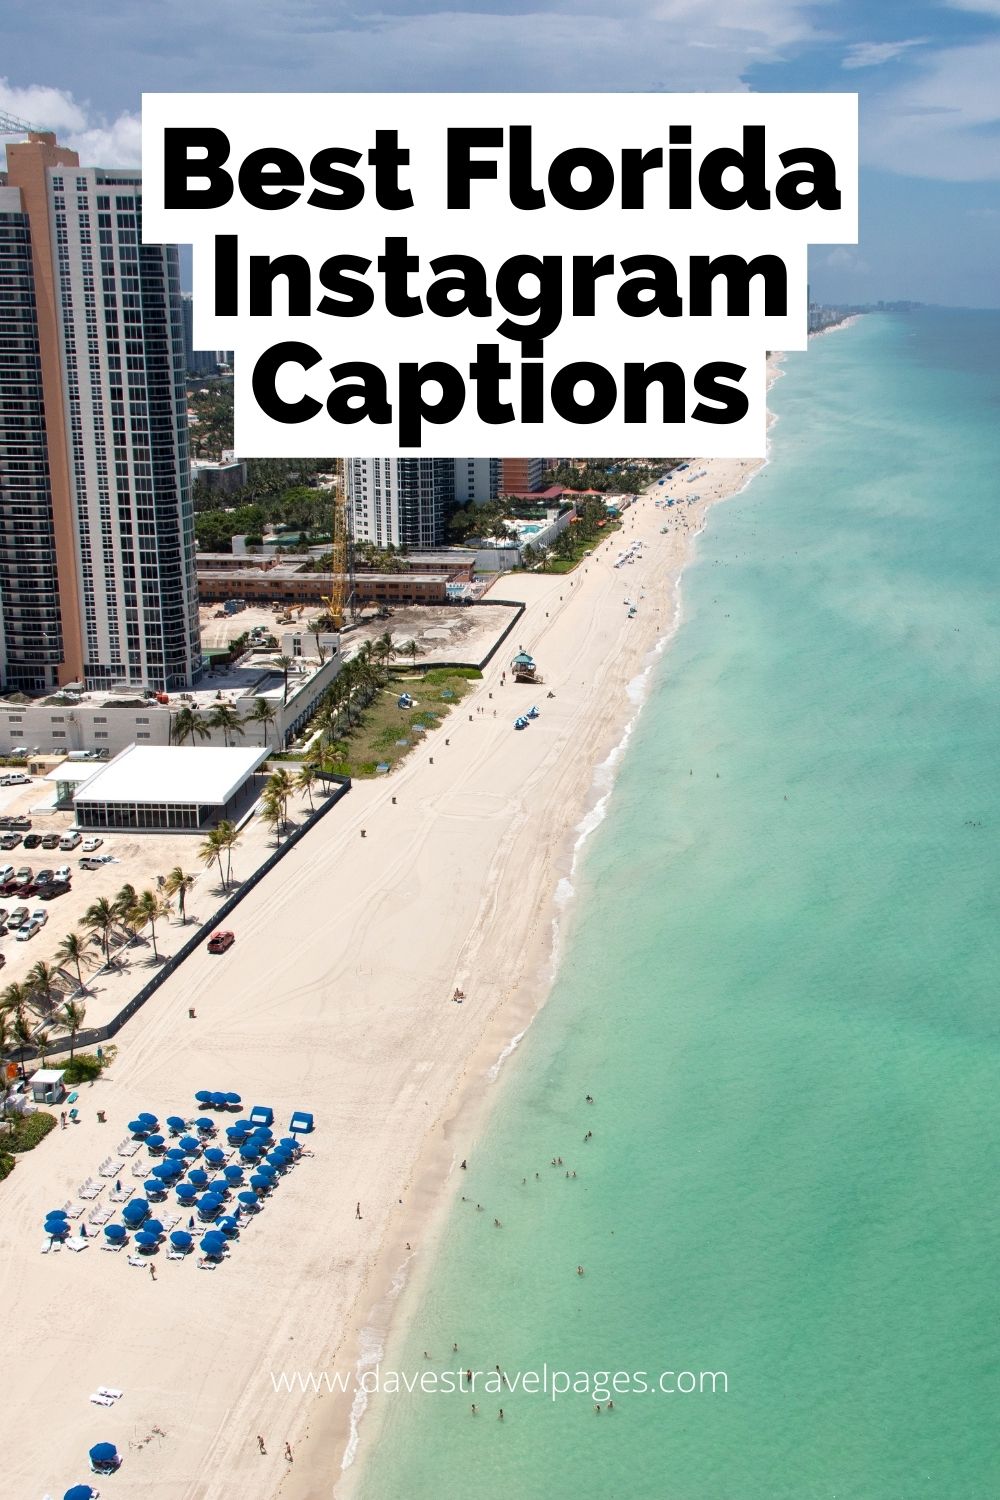 Instagram Captions About Florida